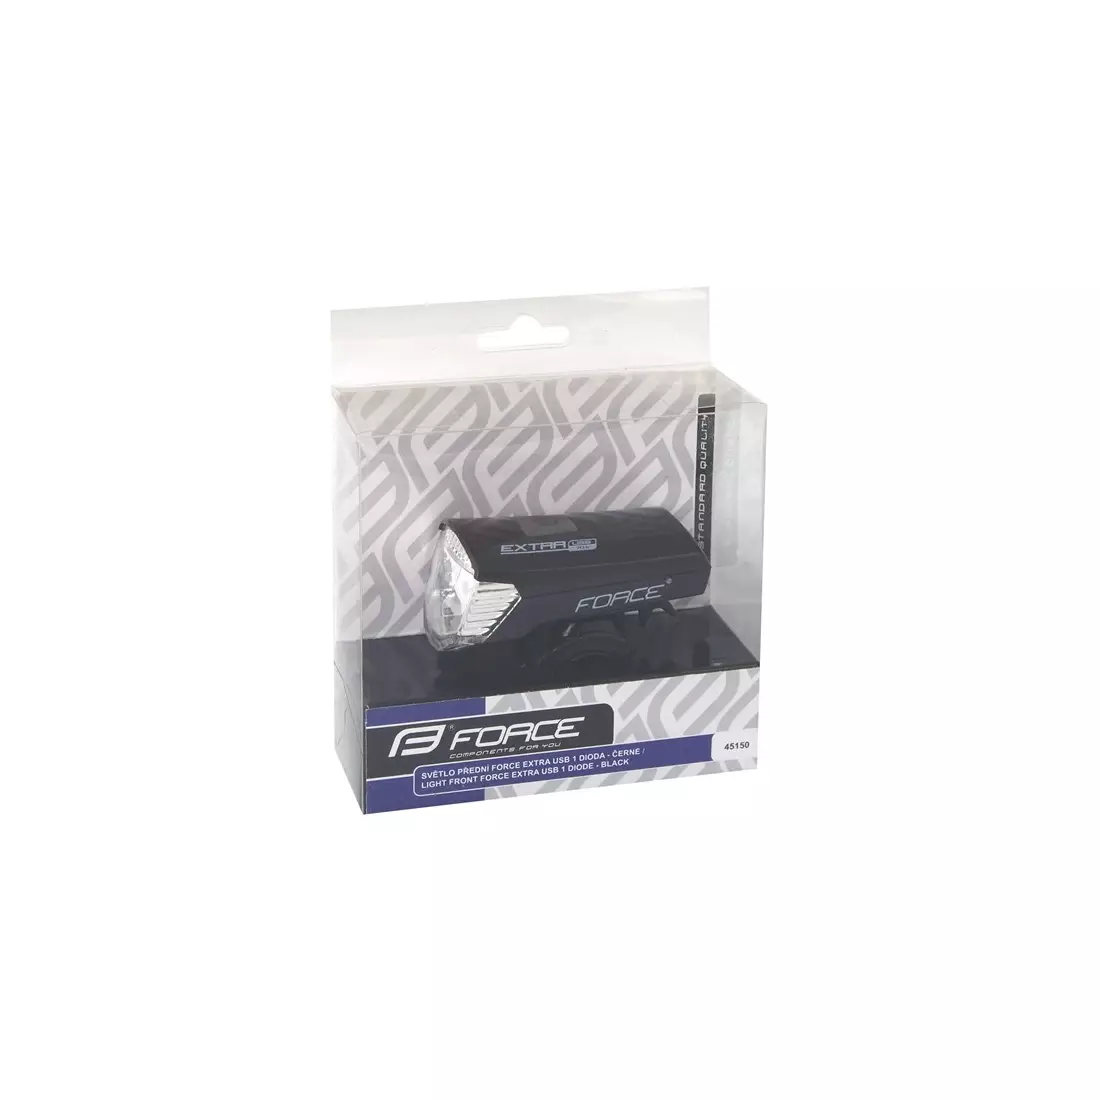 FORCE EXTRA - 45150 - USB front light, LED, 70 lumens